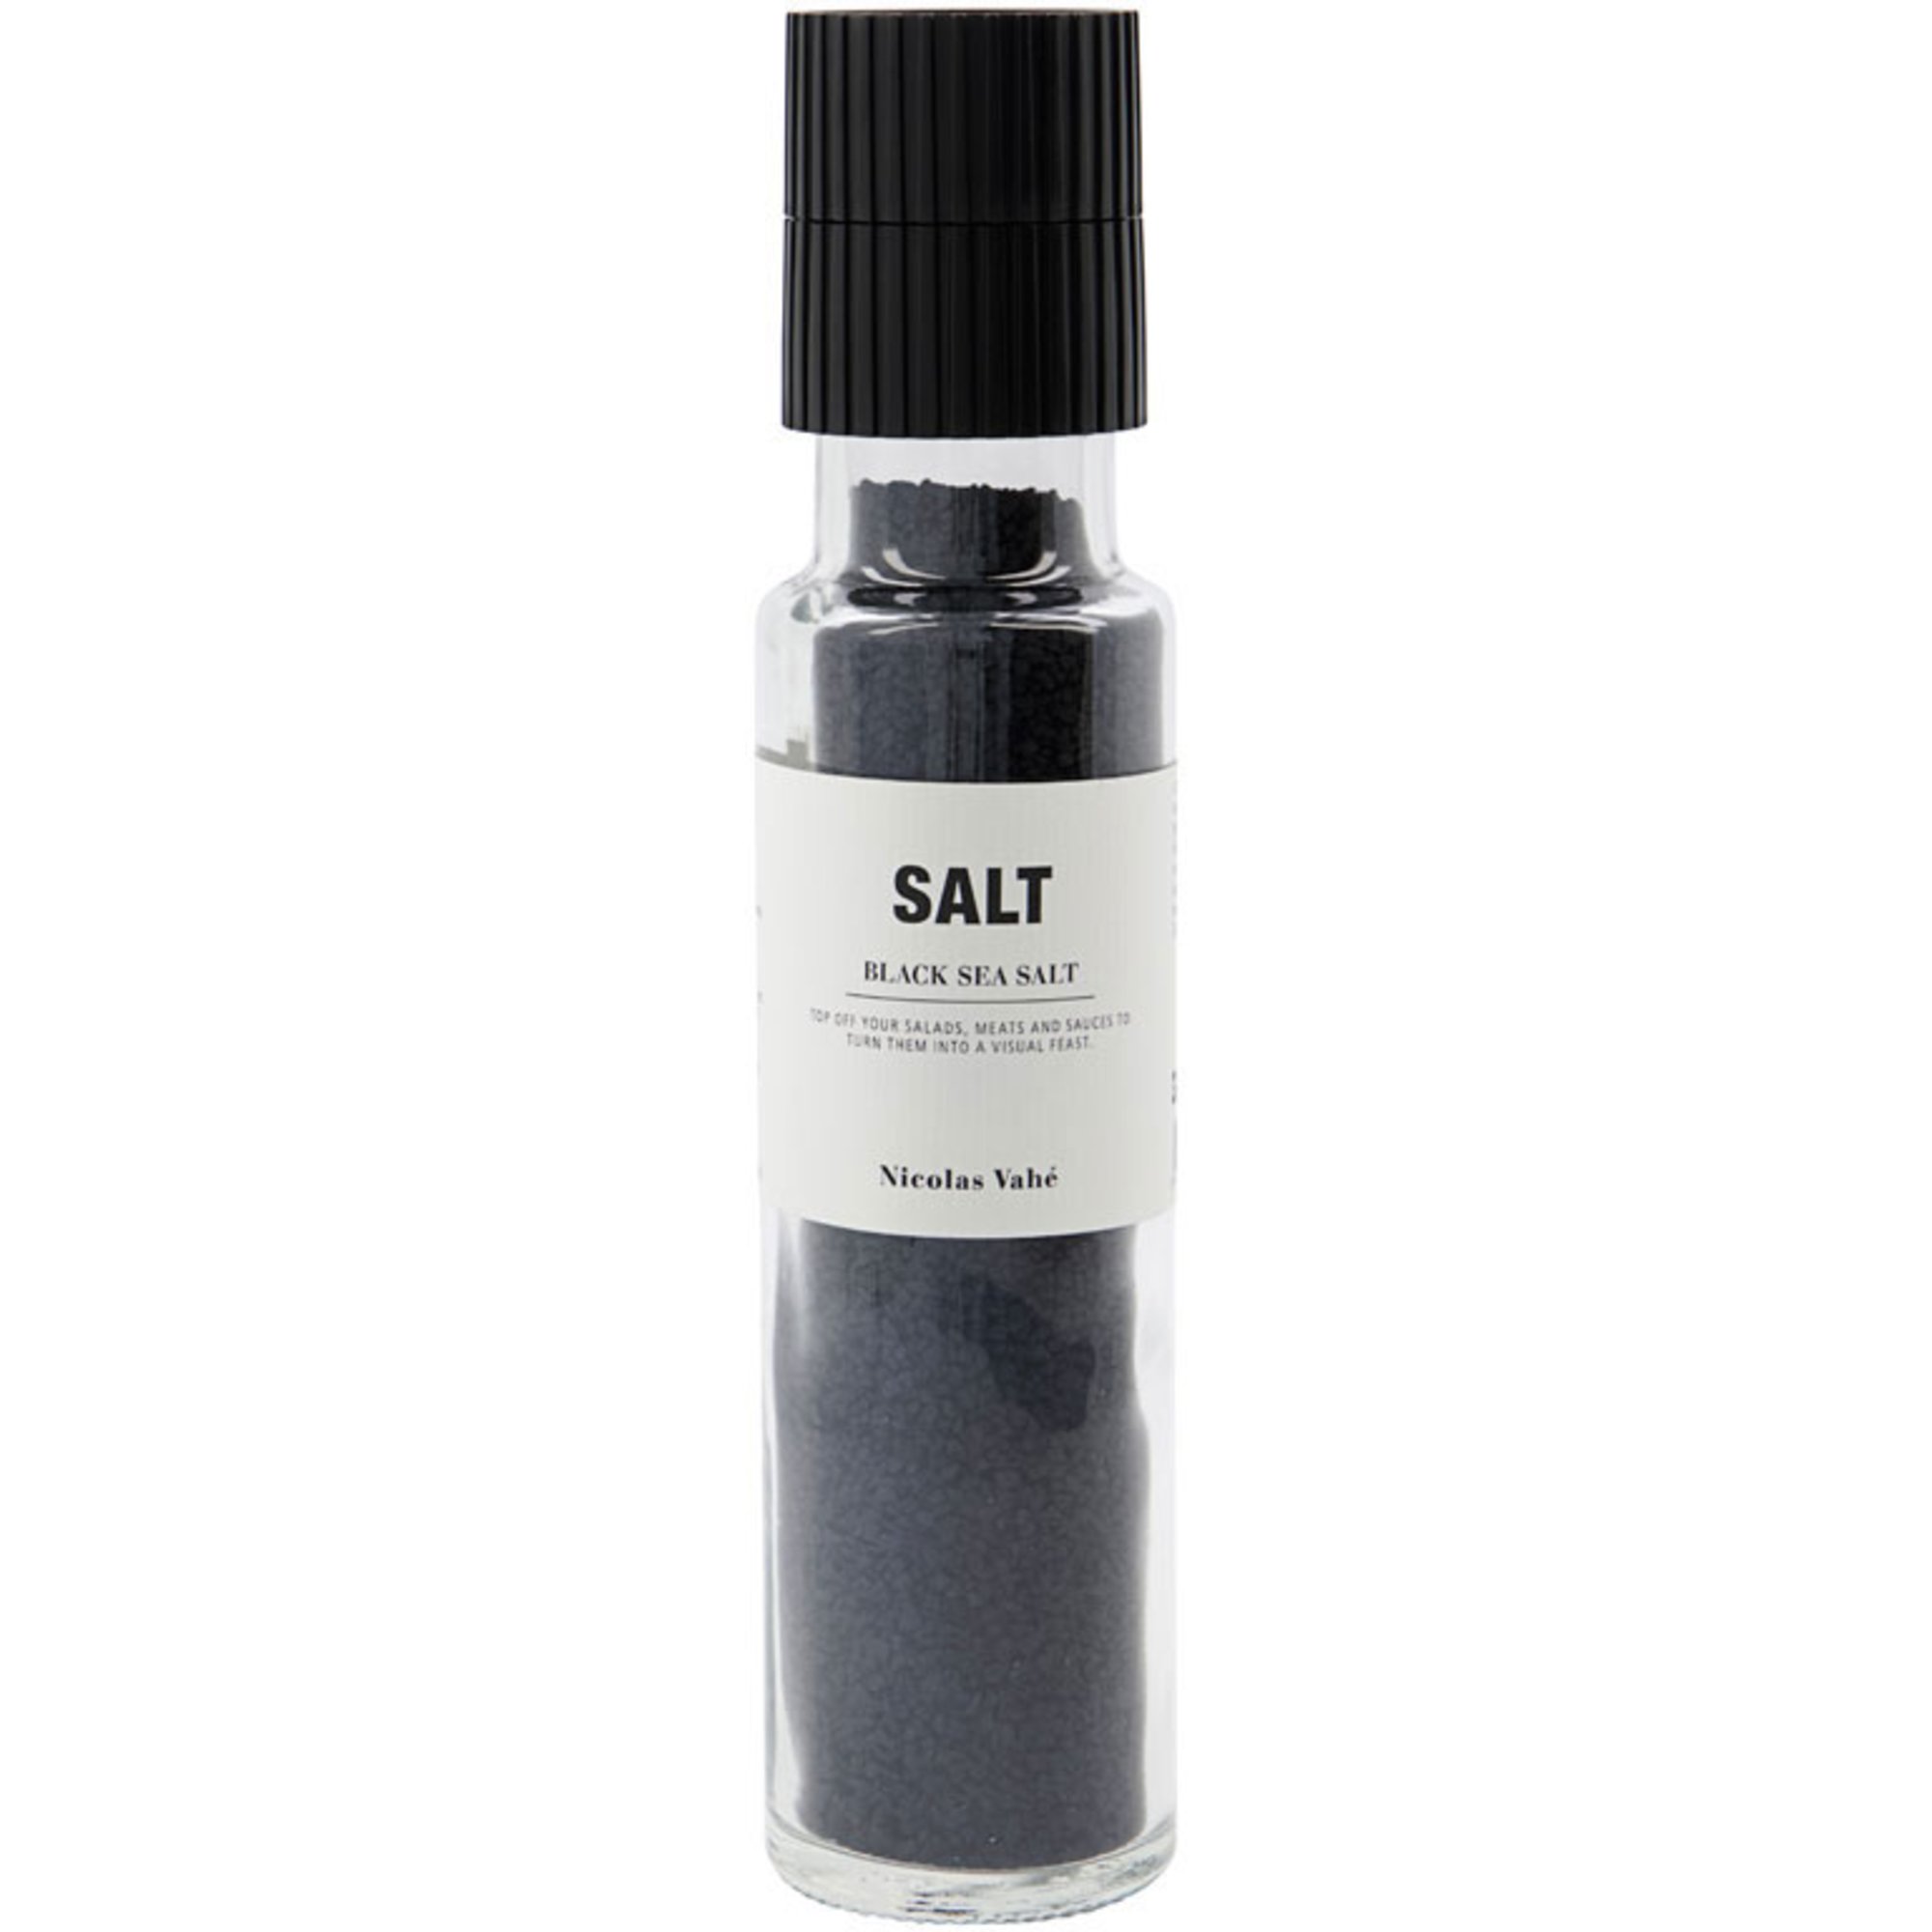 Image of Nicolas Vahé Black salt 320 g